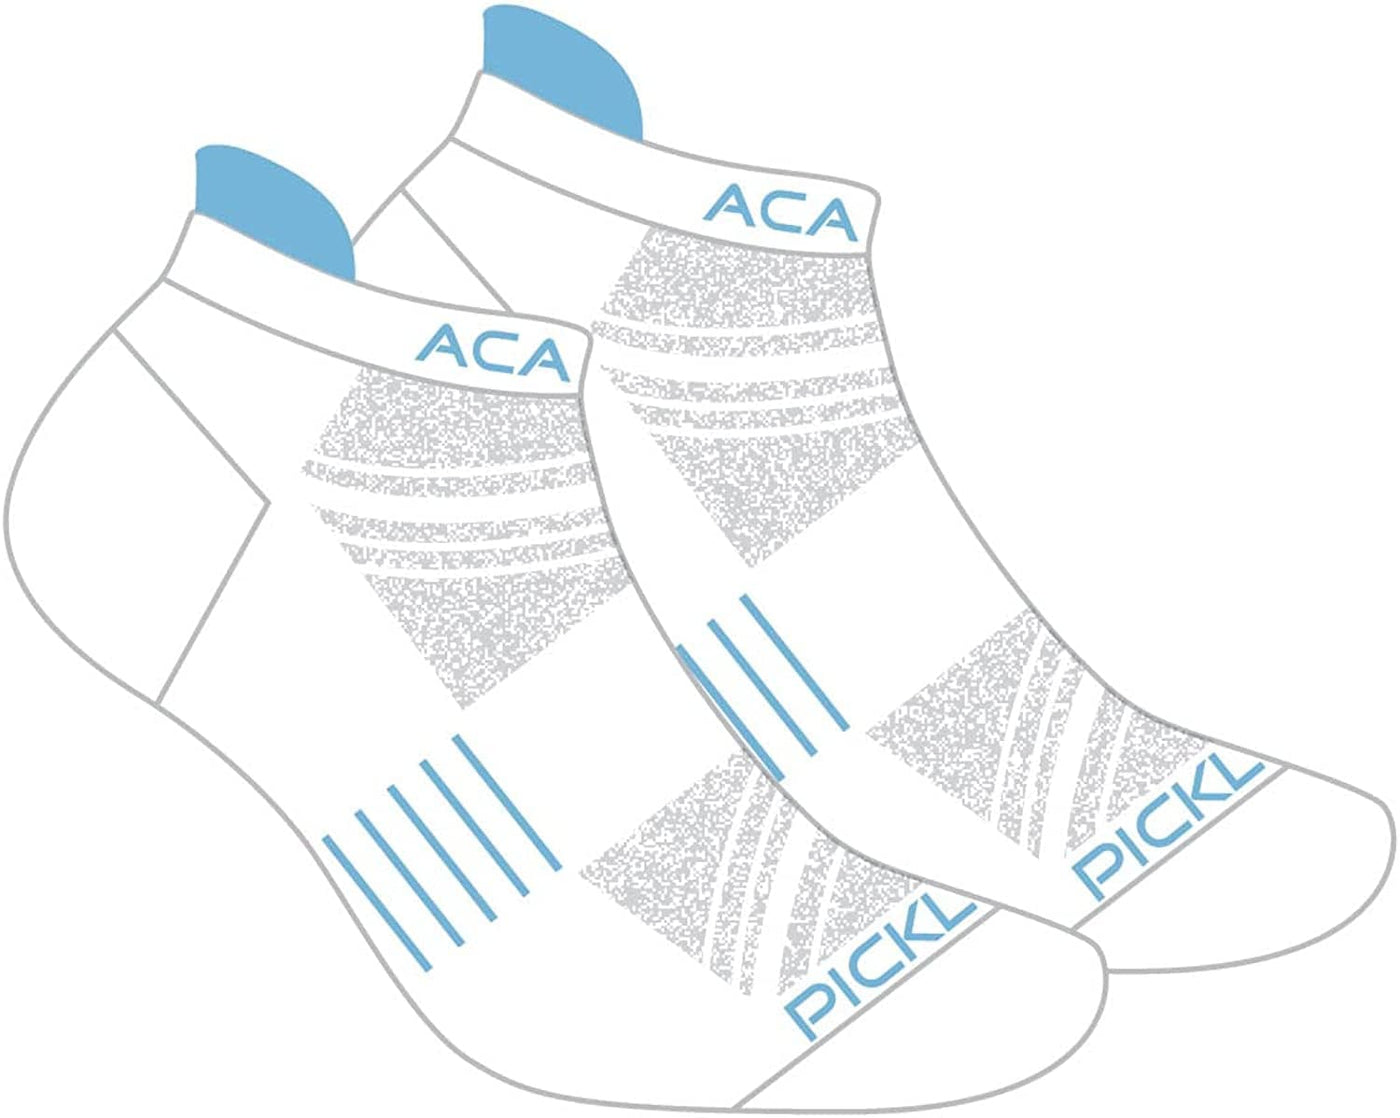 Acacia Performance Ankle Pickleball Socks